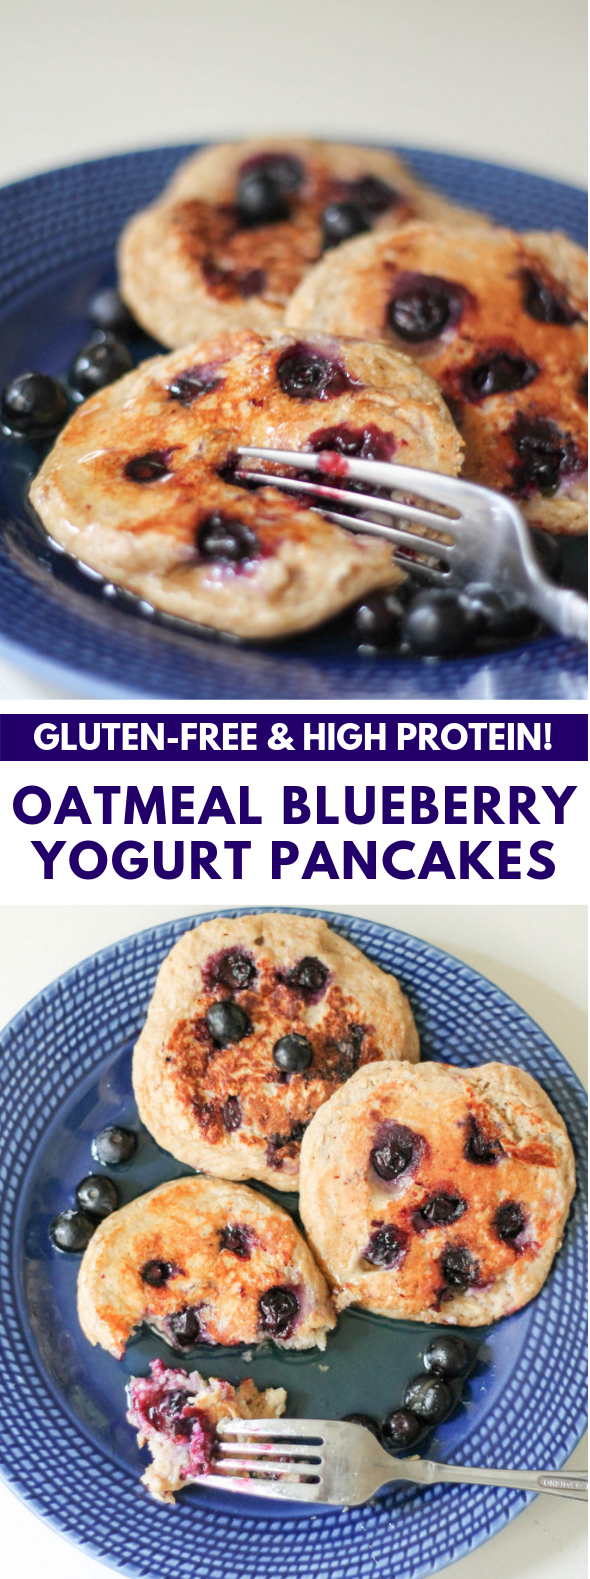 Oatmeal Blueberry Yogurt Pancakes (gluten free, high protein!)